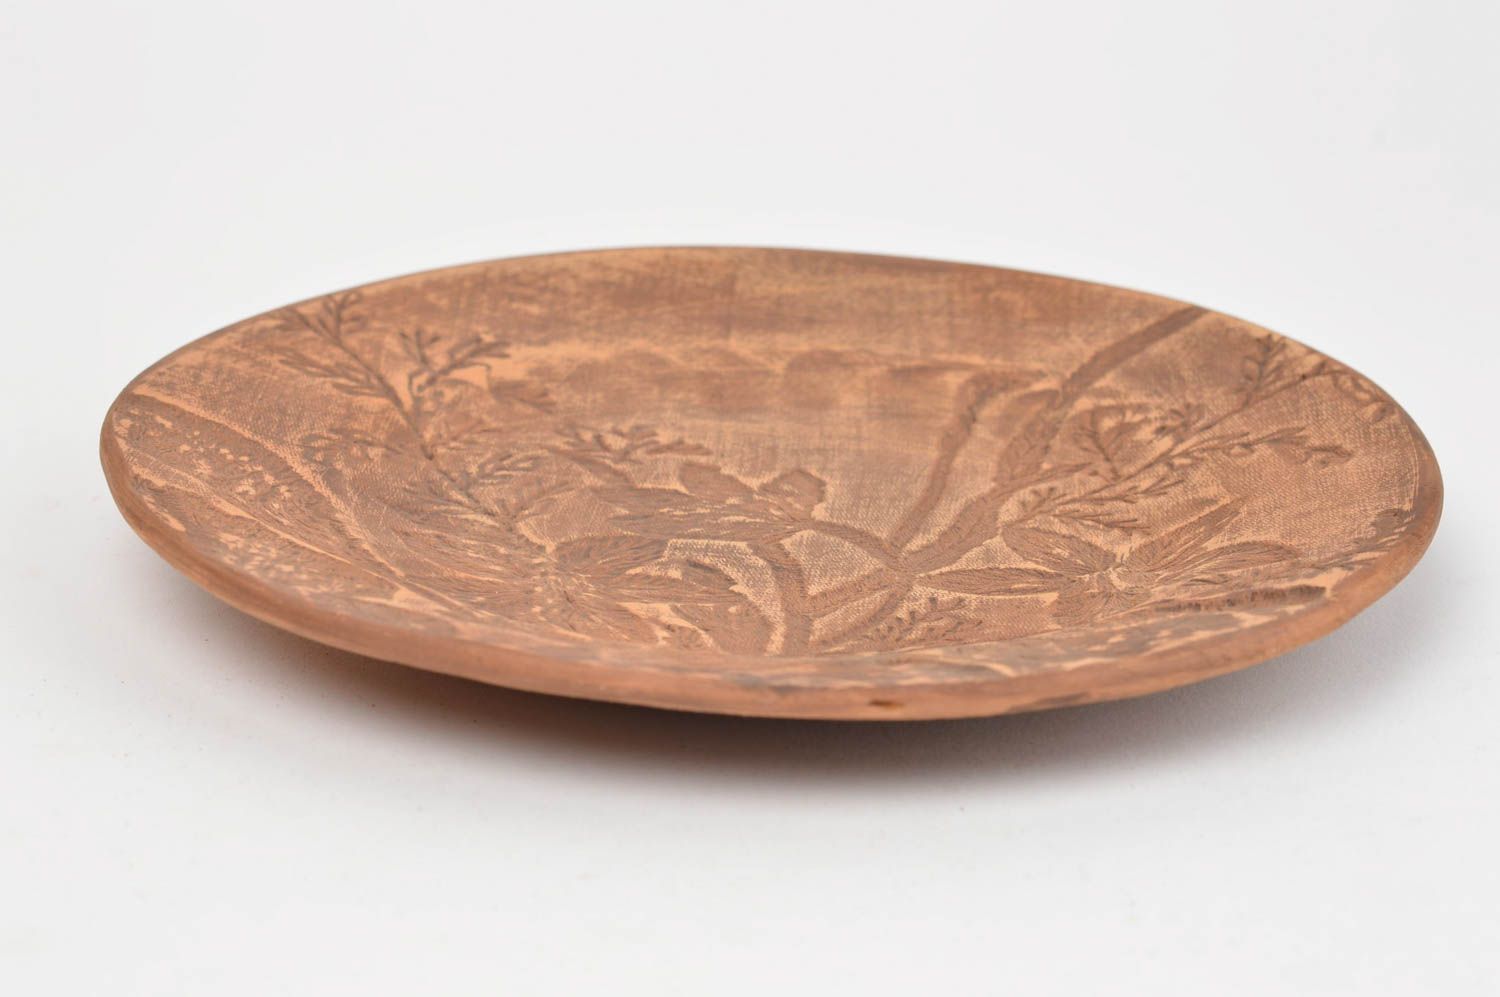 Unusual ceramic dinner plate designer clay plate kitchen designs decor ideas photo 3